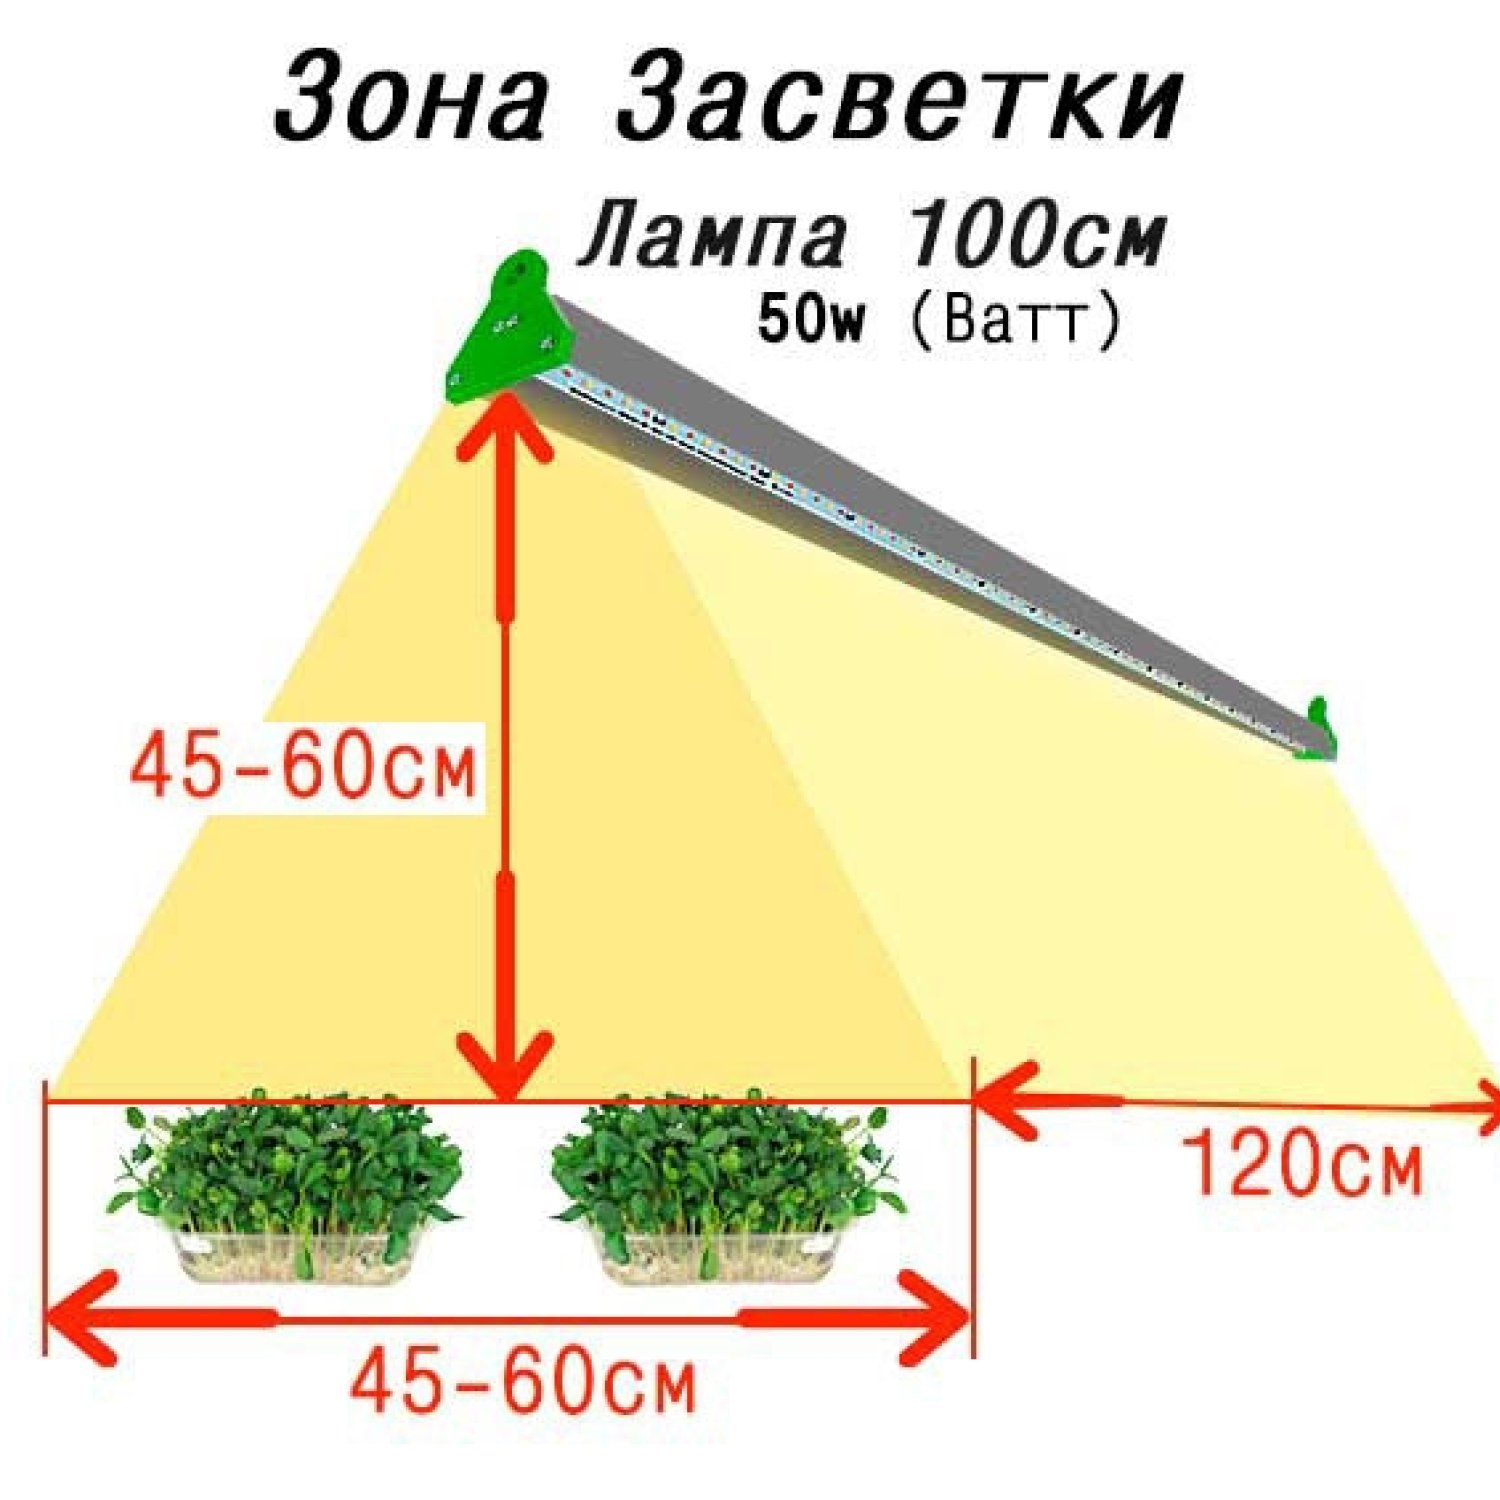 Фитолампа для растений MF100_50 Ватт. Длина 100 см